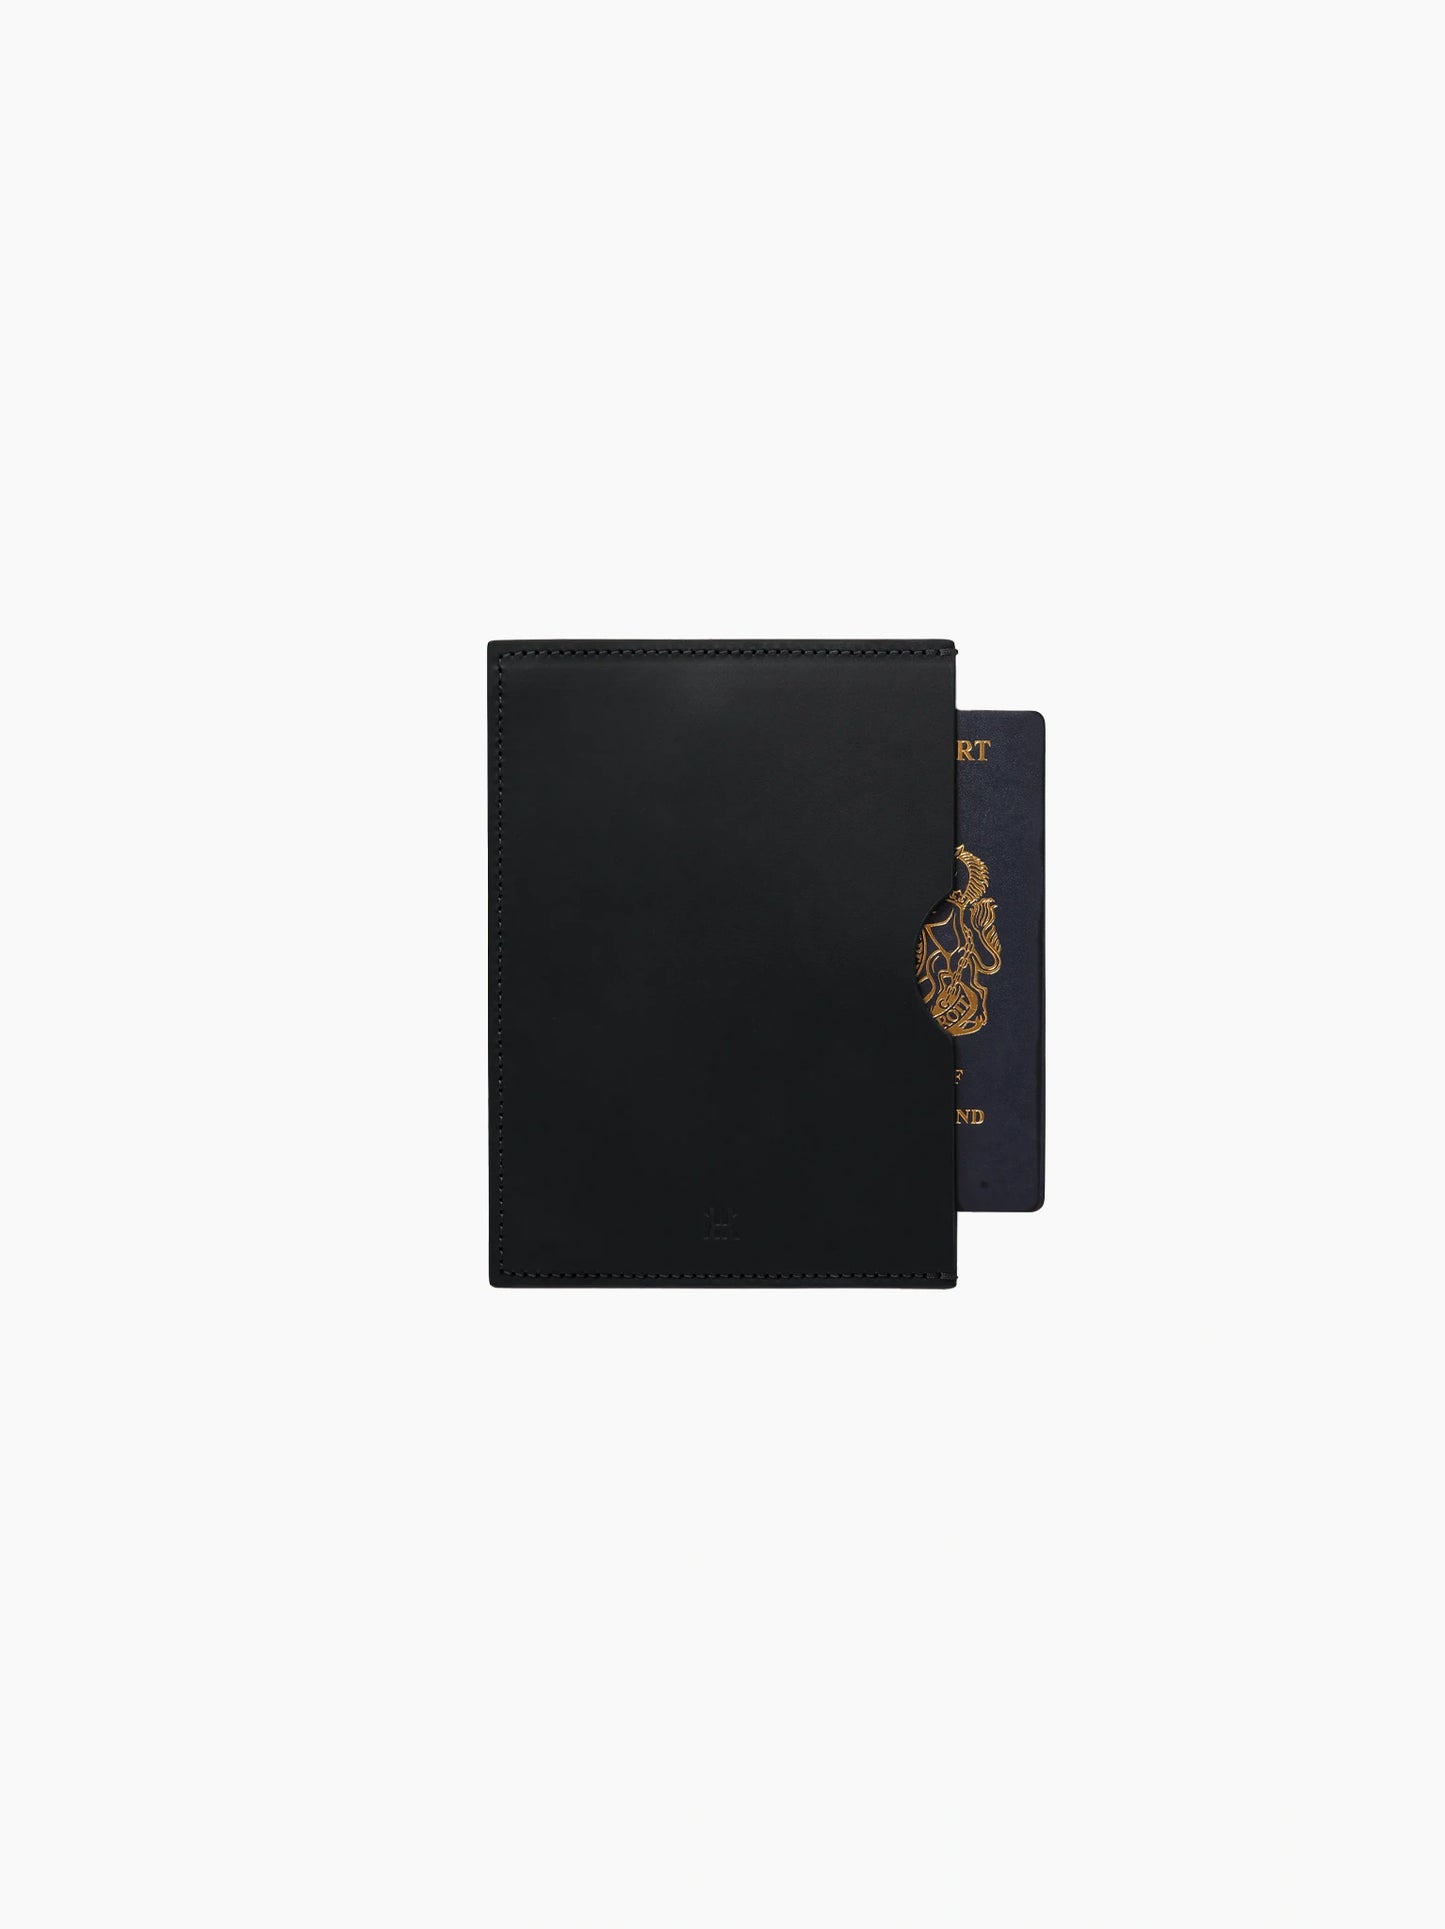 Black Leather Passport Holder